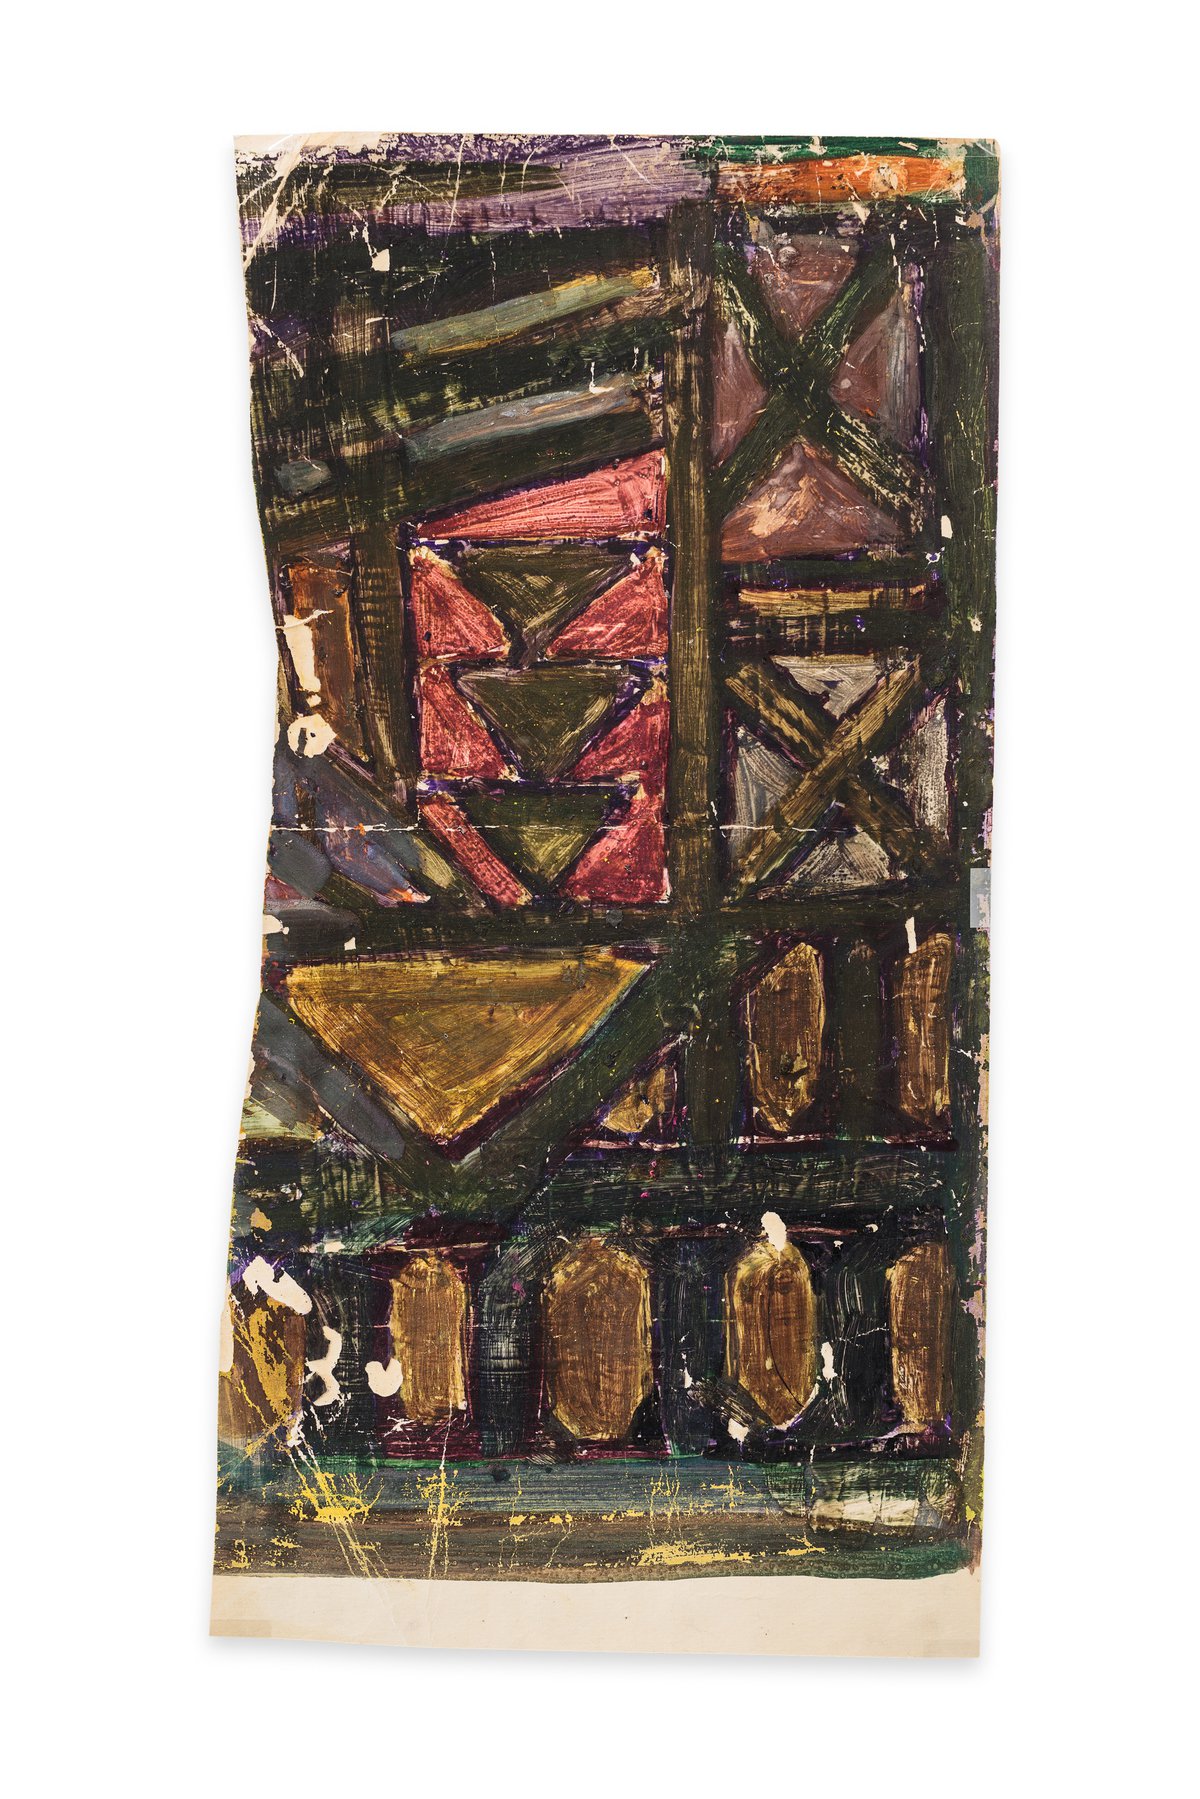 Anna AndreevaElectrification, 1950sEncaustics, wax, crayon on paper51 x 25.8 cm